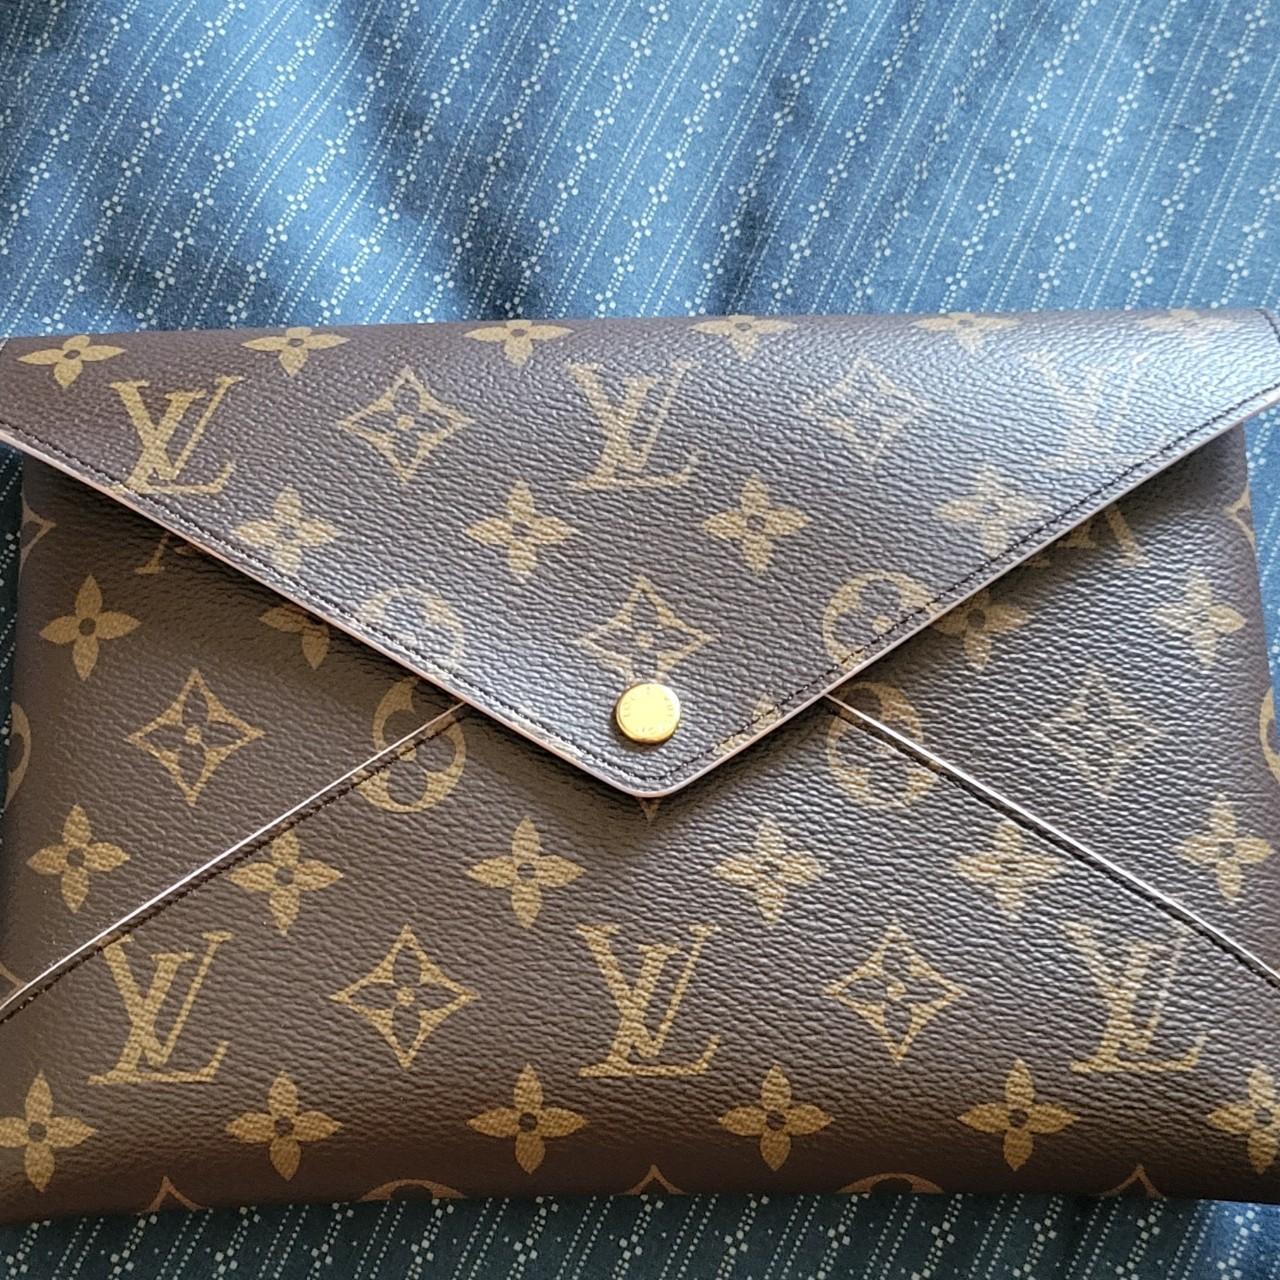 Louis Vuitton kirigami pochette brought in Paris - Depop